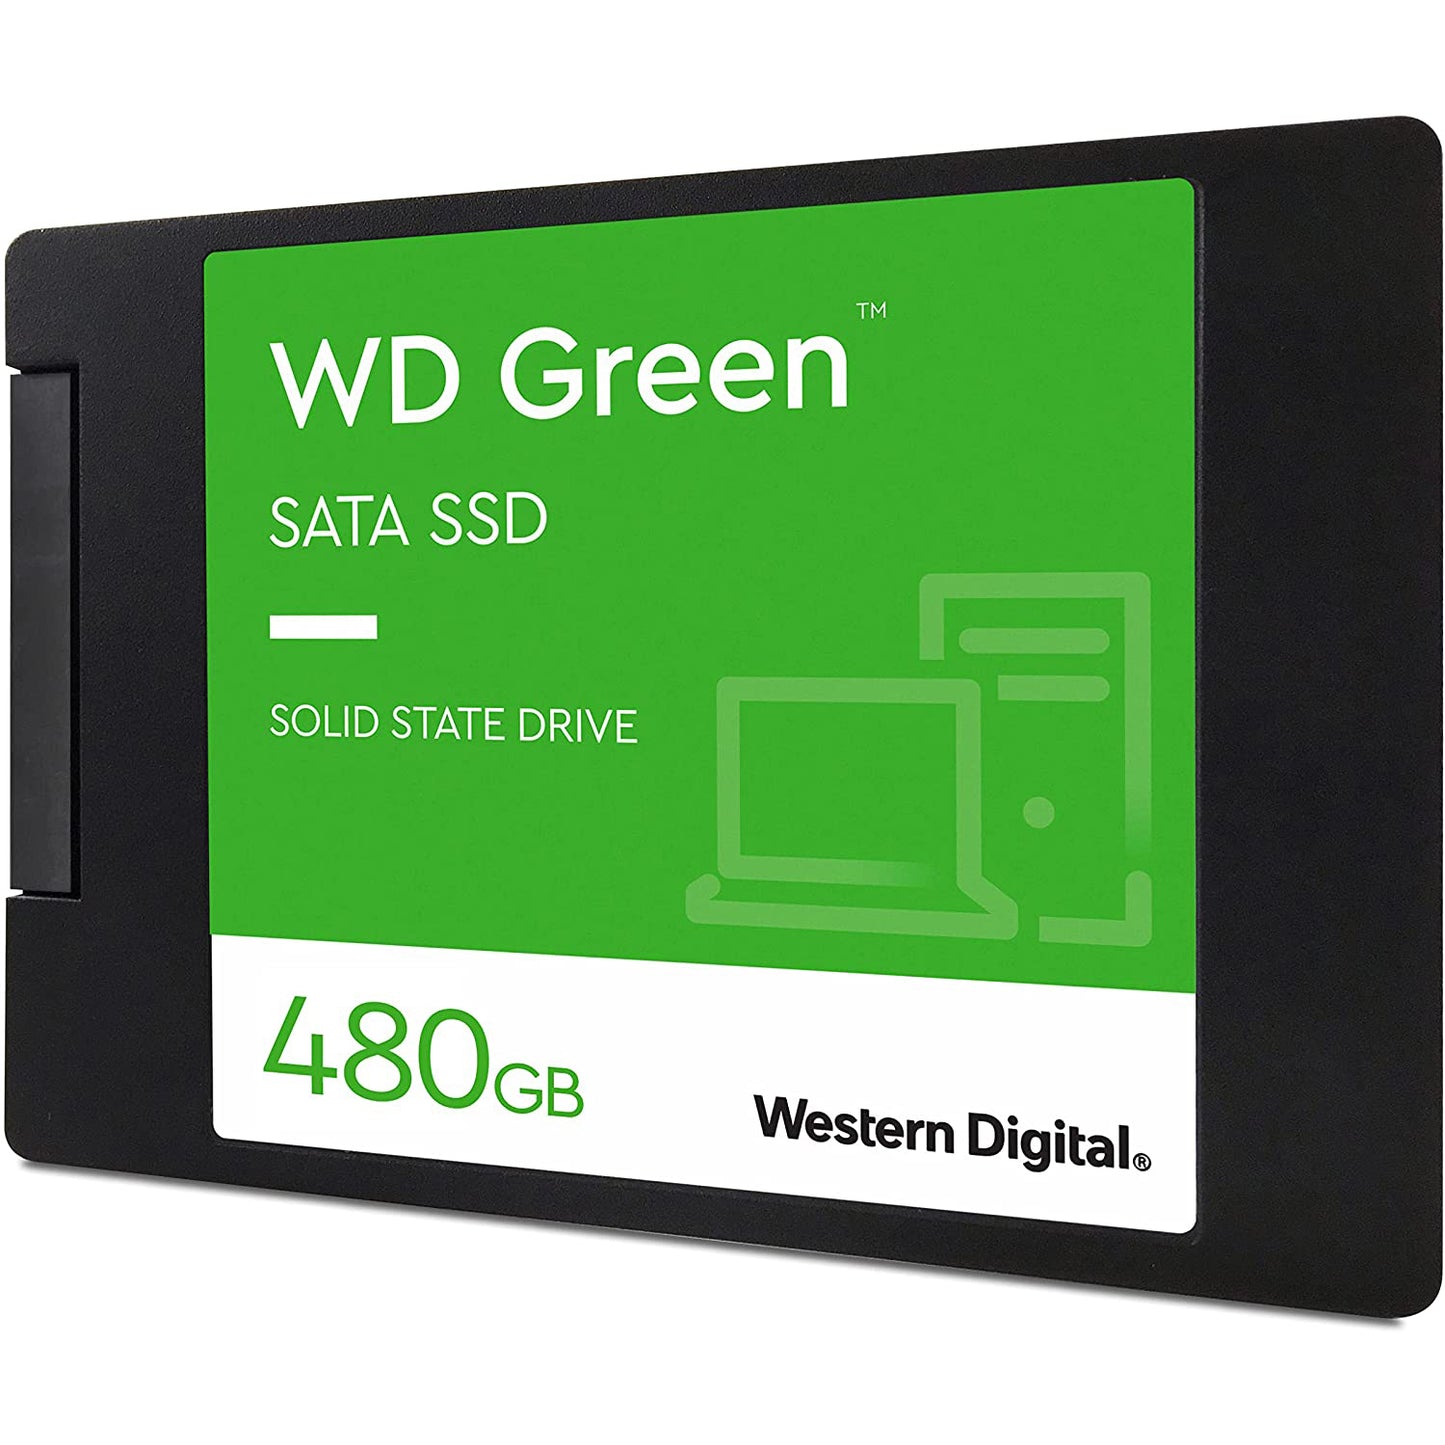 WD Green 480GB 2.5" SATA SSD/Solid State Drive